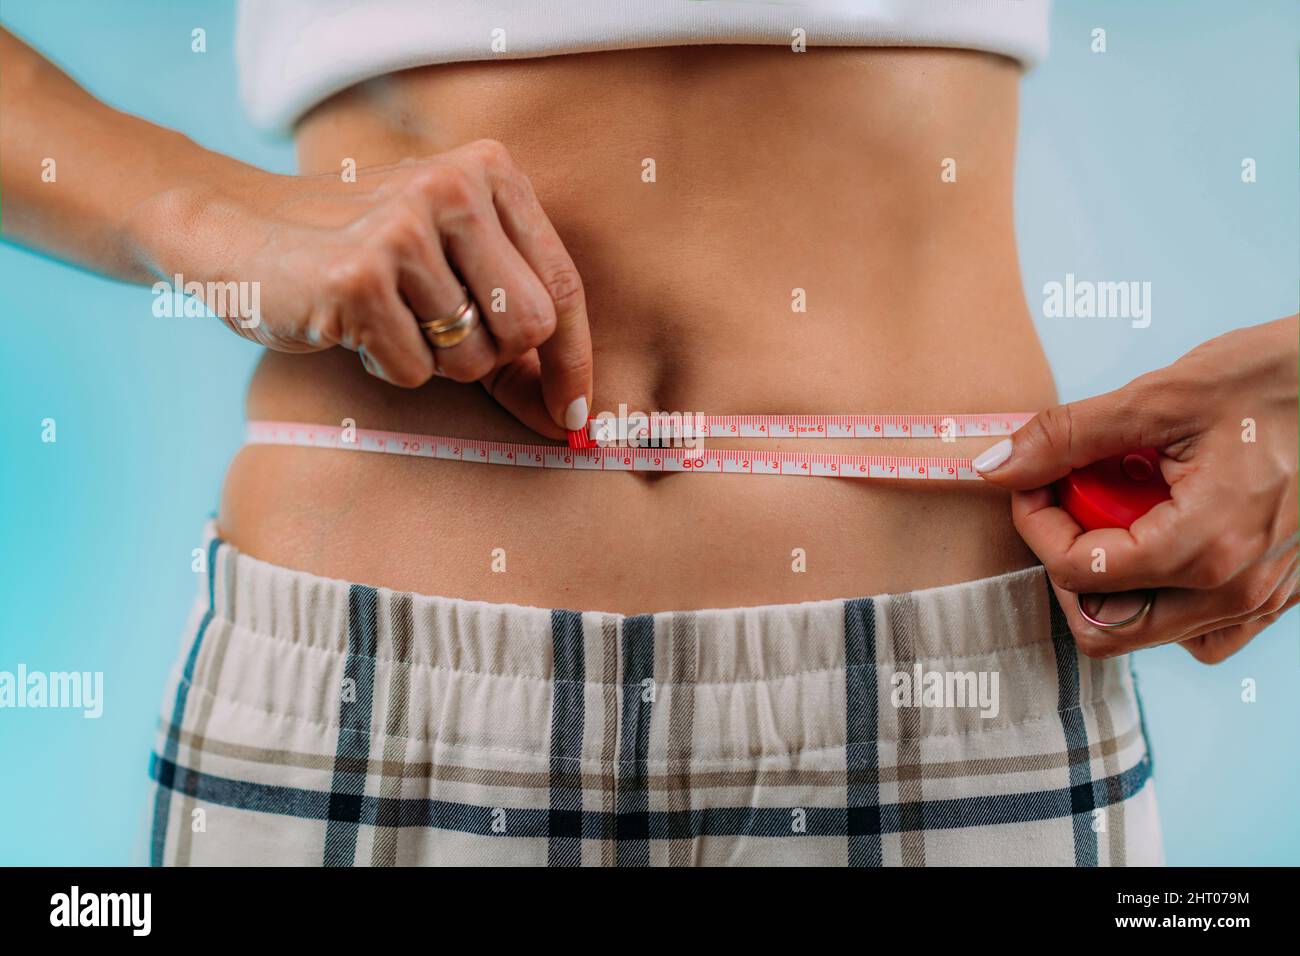 https://c8.alamy.com/comp/2HT079M/woman-measuring-her-waist-size-2HT079M.jpg